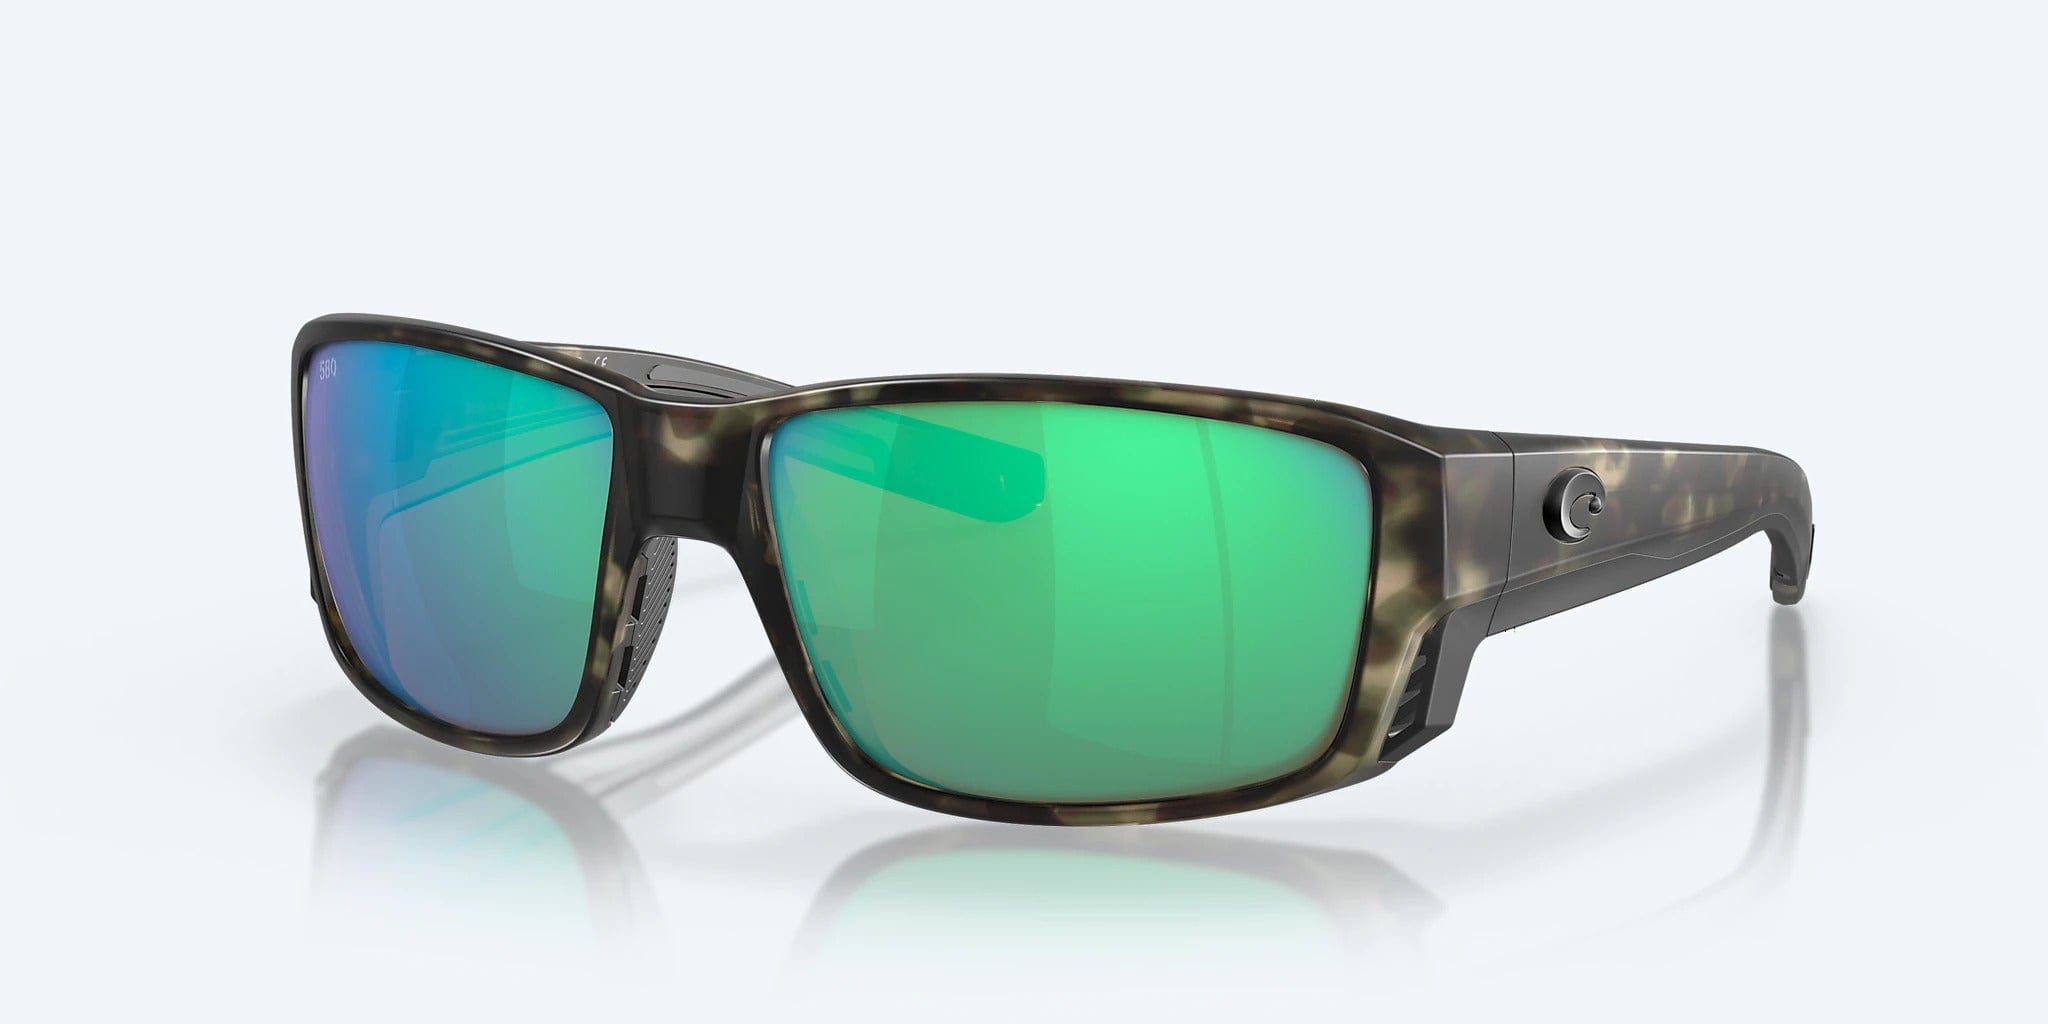 Costa Del Mar Tuna Alley Pro Sunglasses - Wetlands / Green Mirror 580G